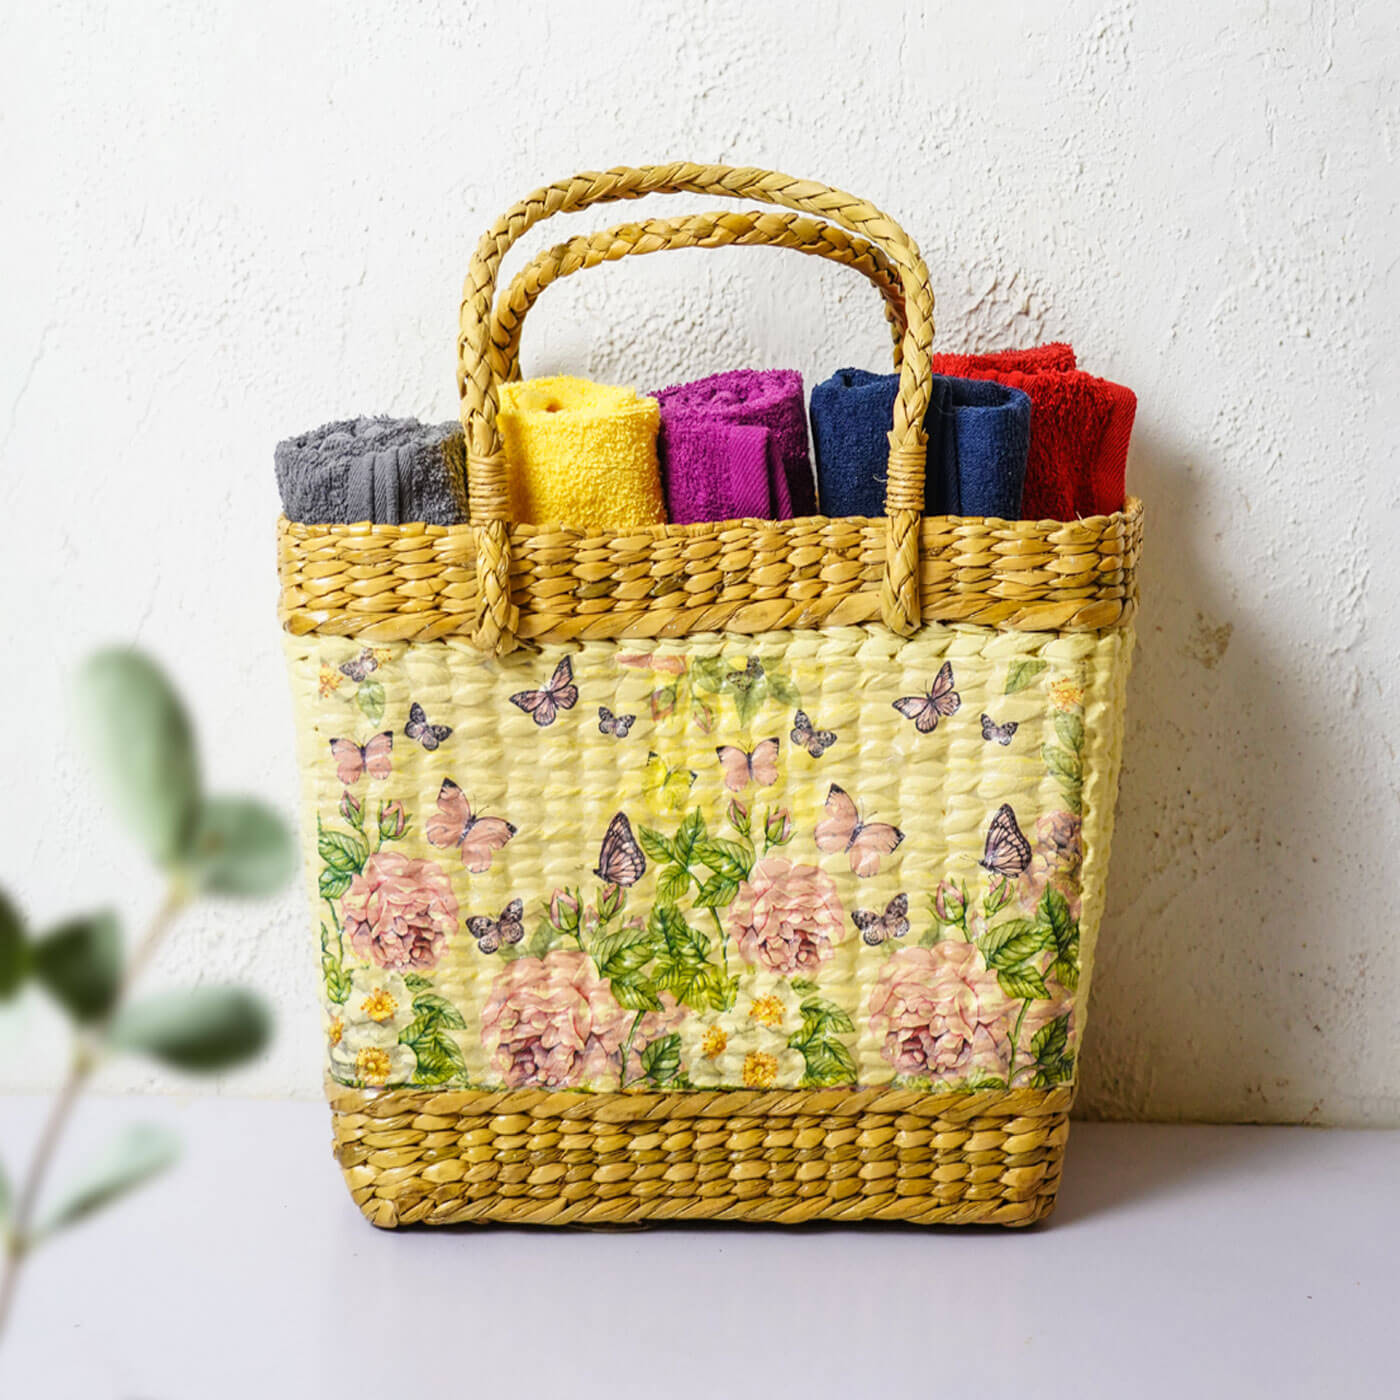 Kauna Grass Handbags with cane handle🌹 Available sizes for u-bag 14